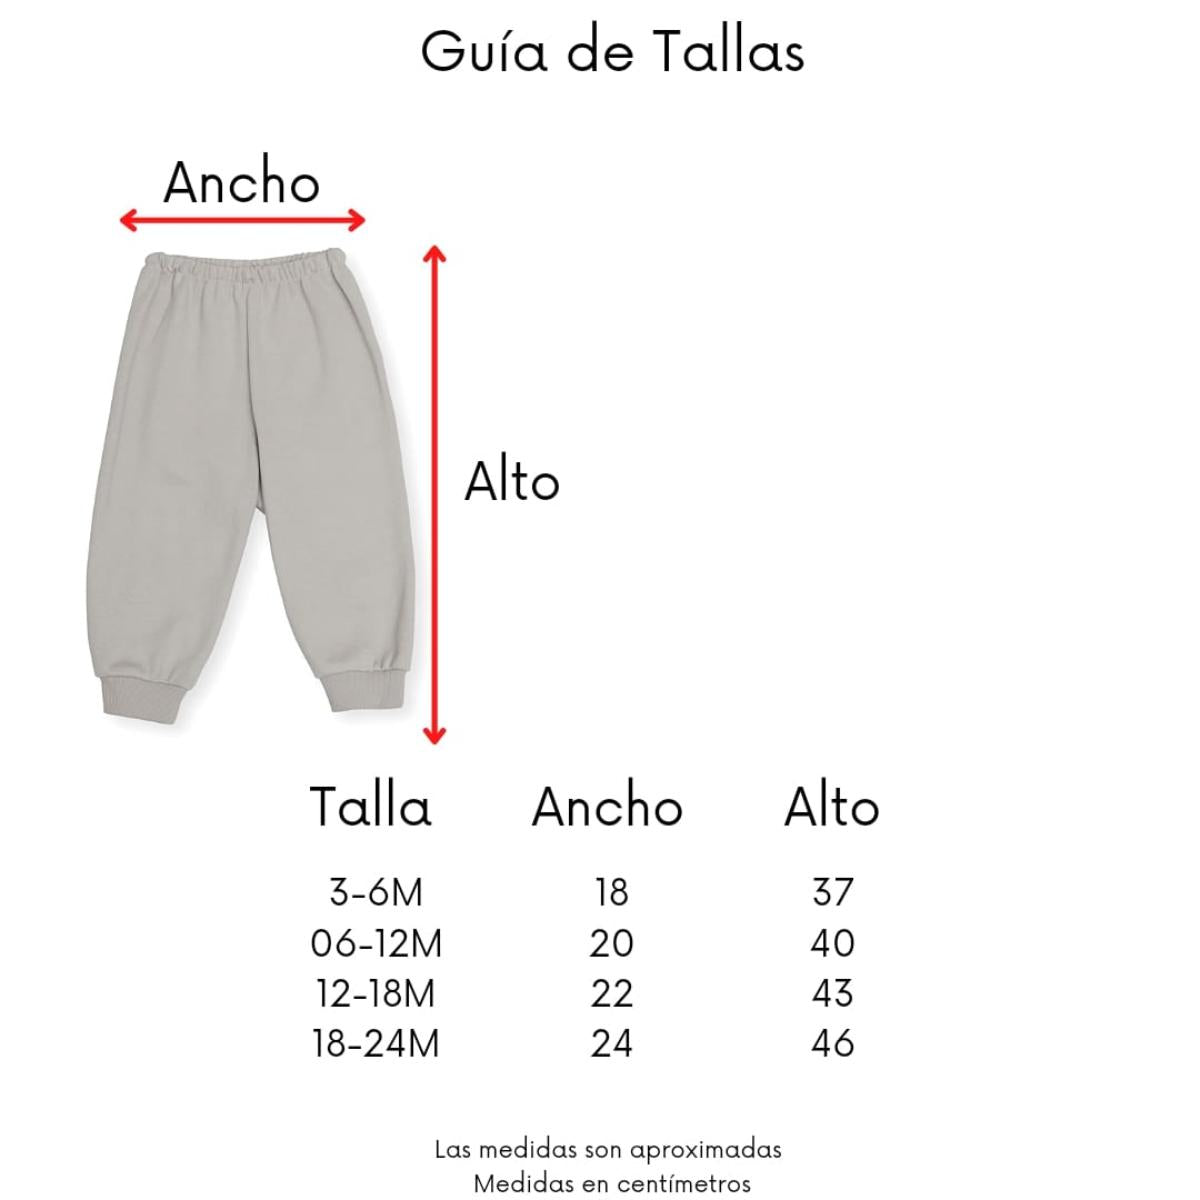 Pants Deportivo Bebé Niño América Original